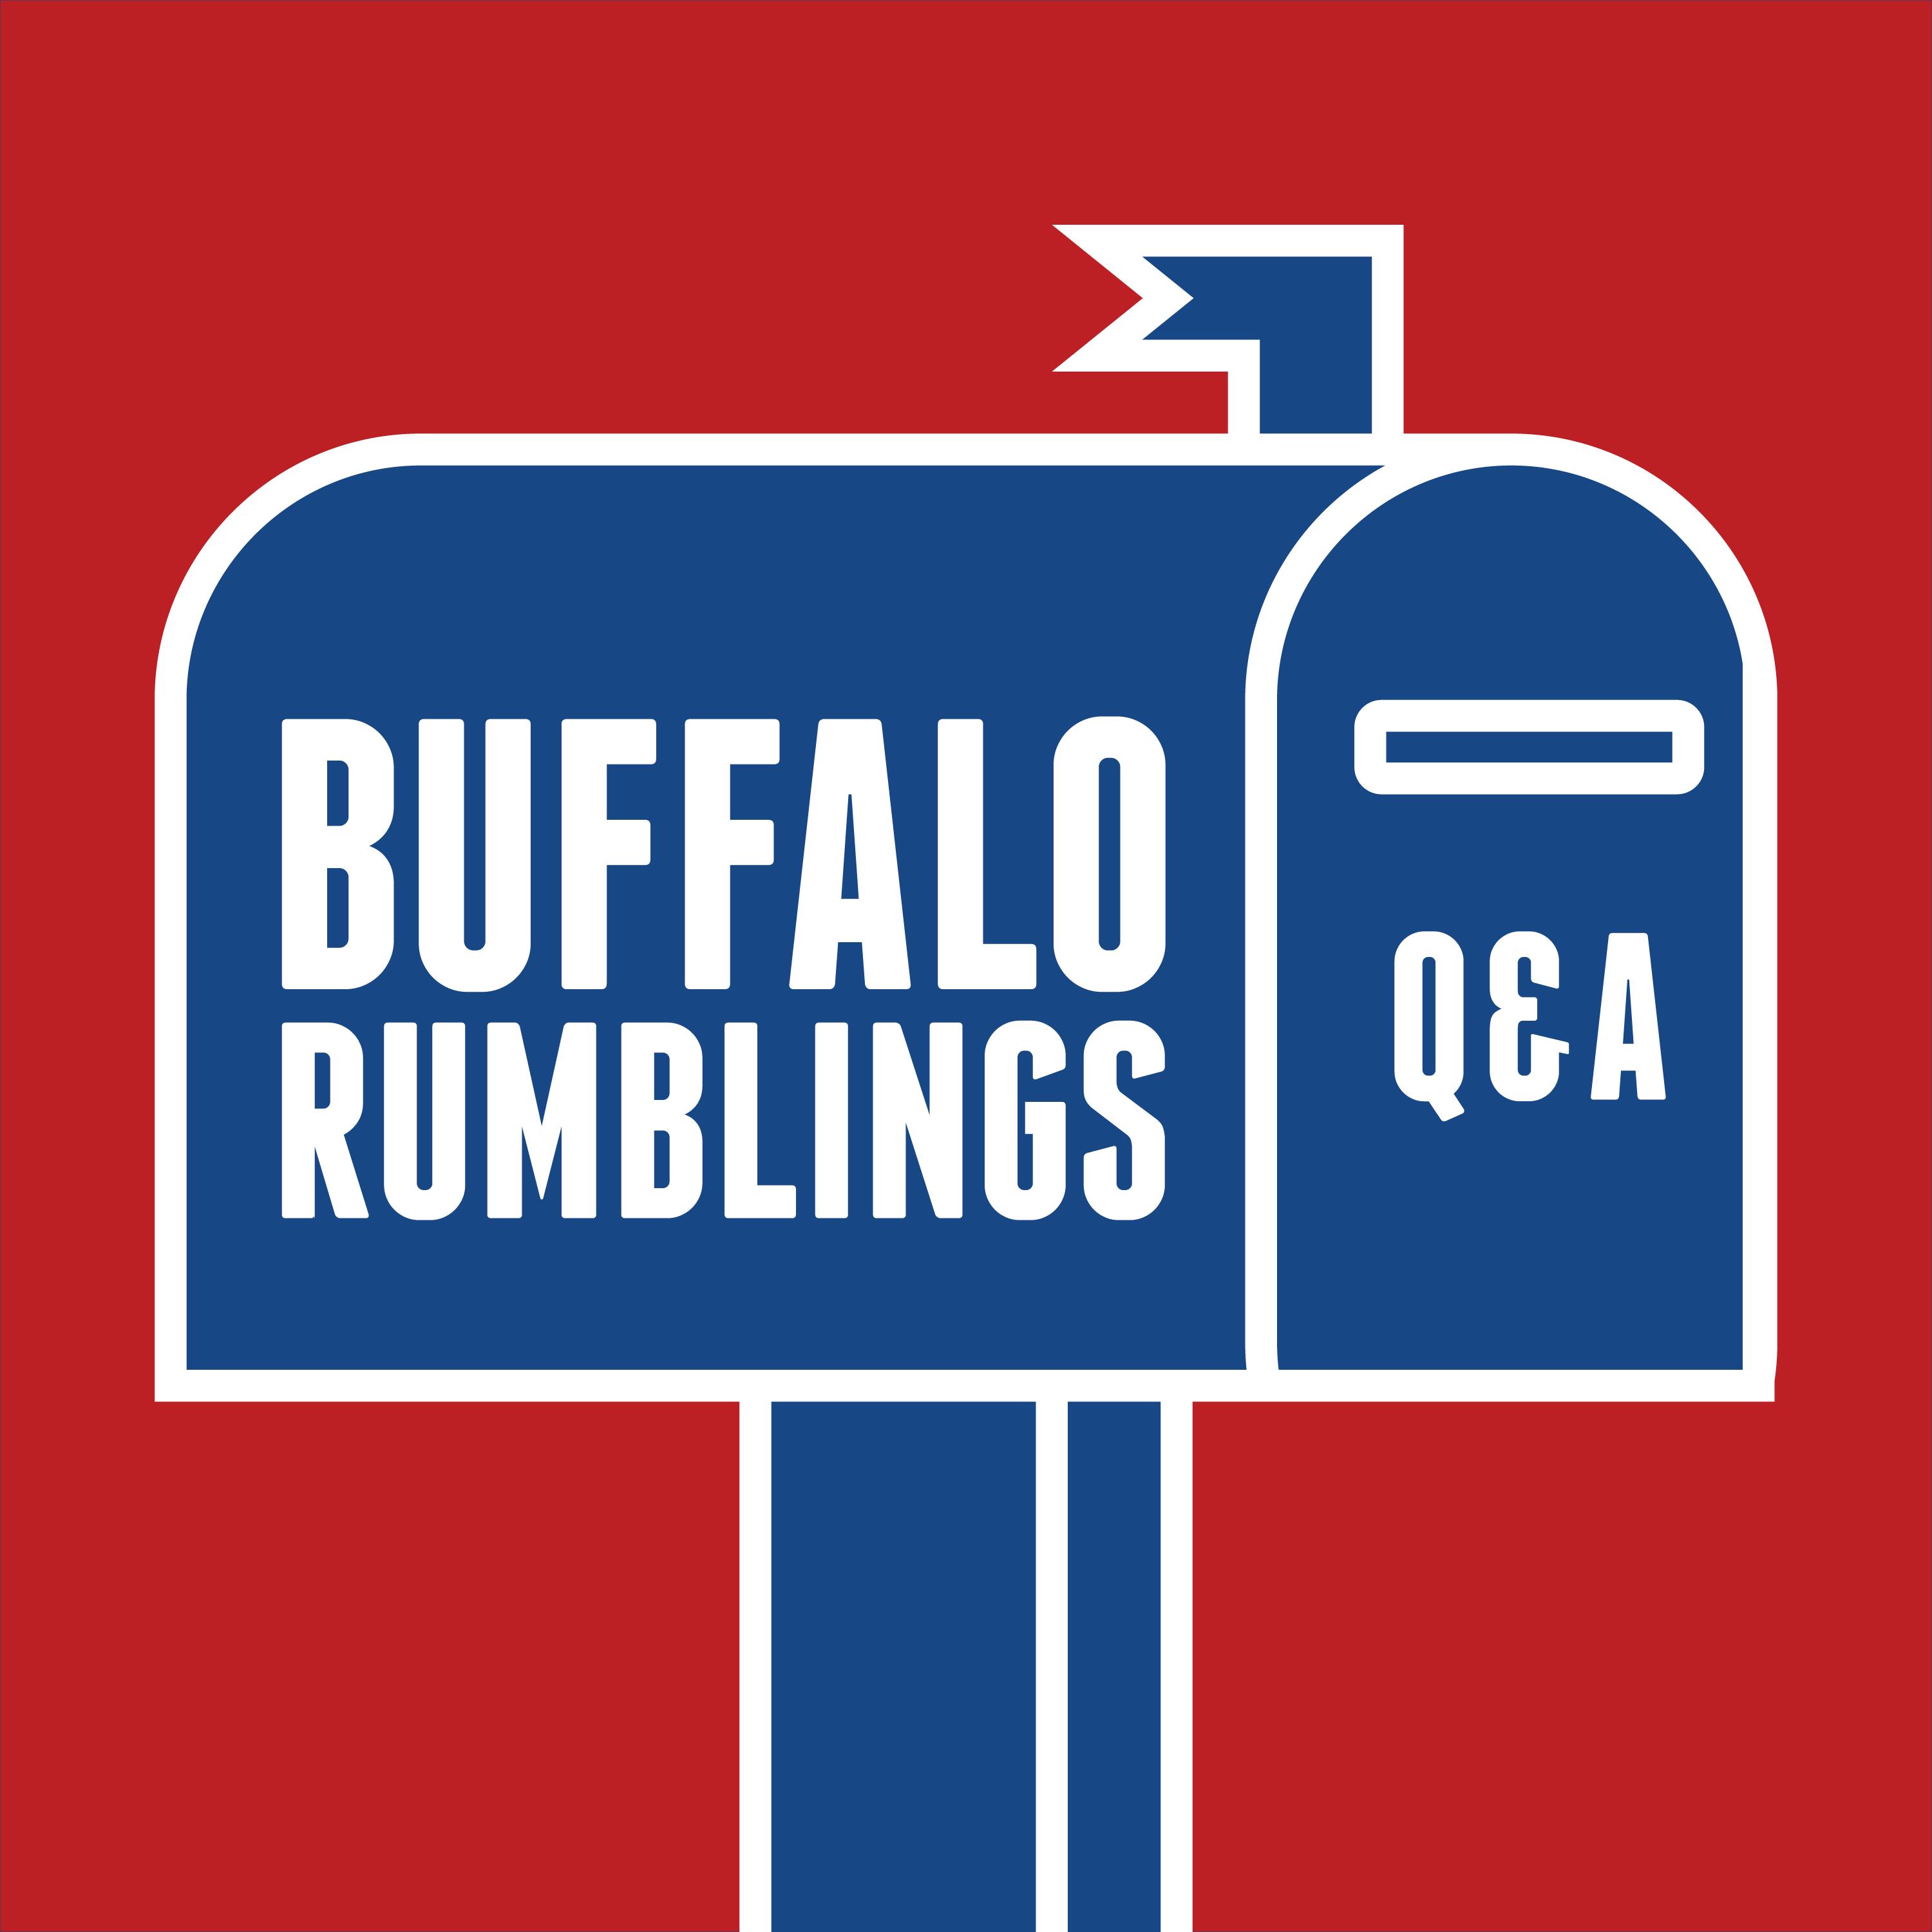 Q&A: Bills' 3rd quarter problems, pass protection, Patriots, and playoffs